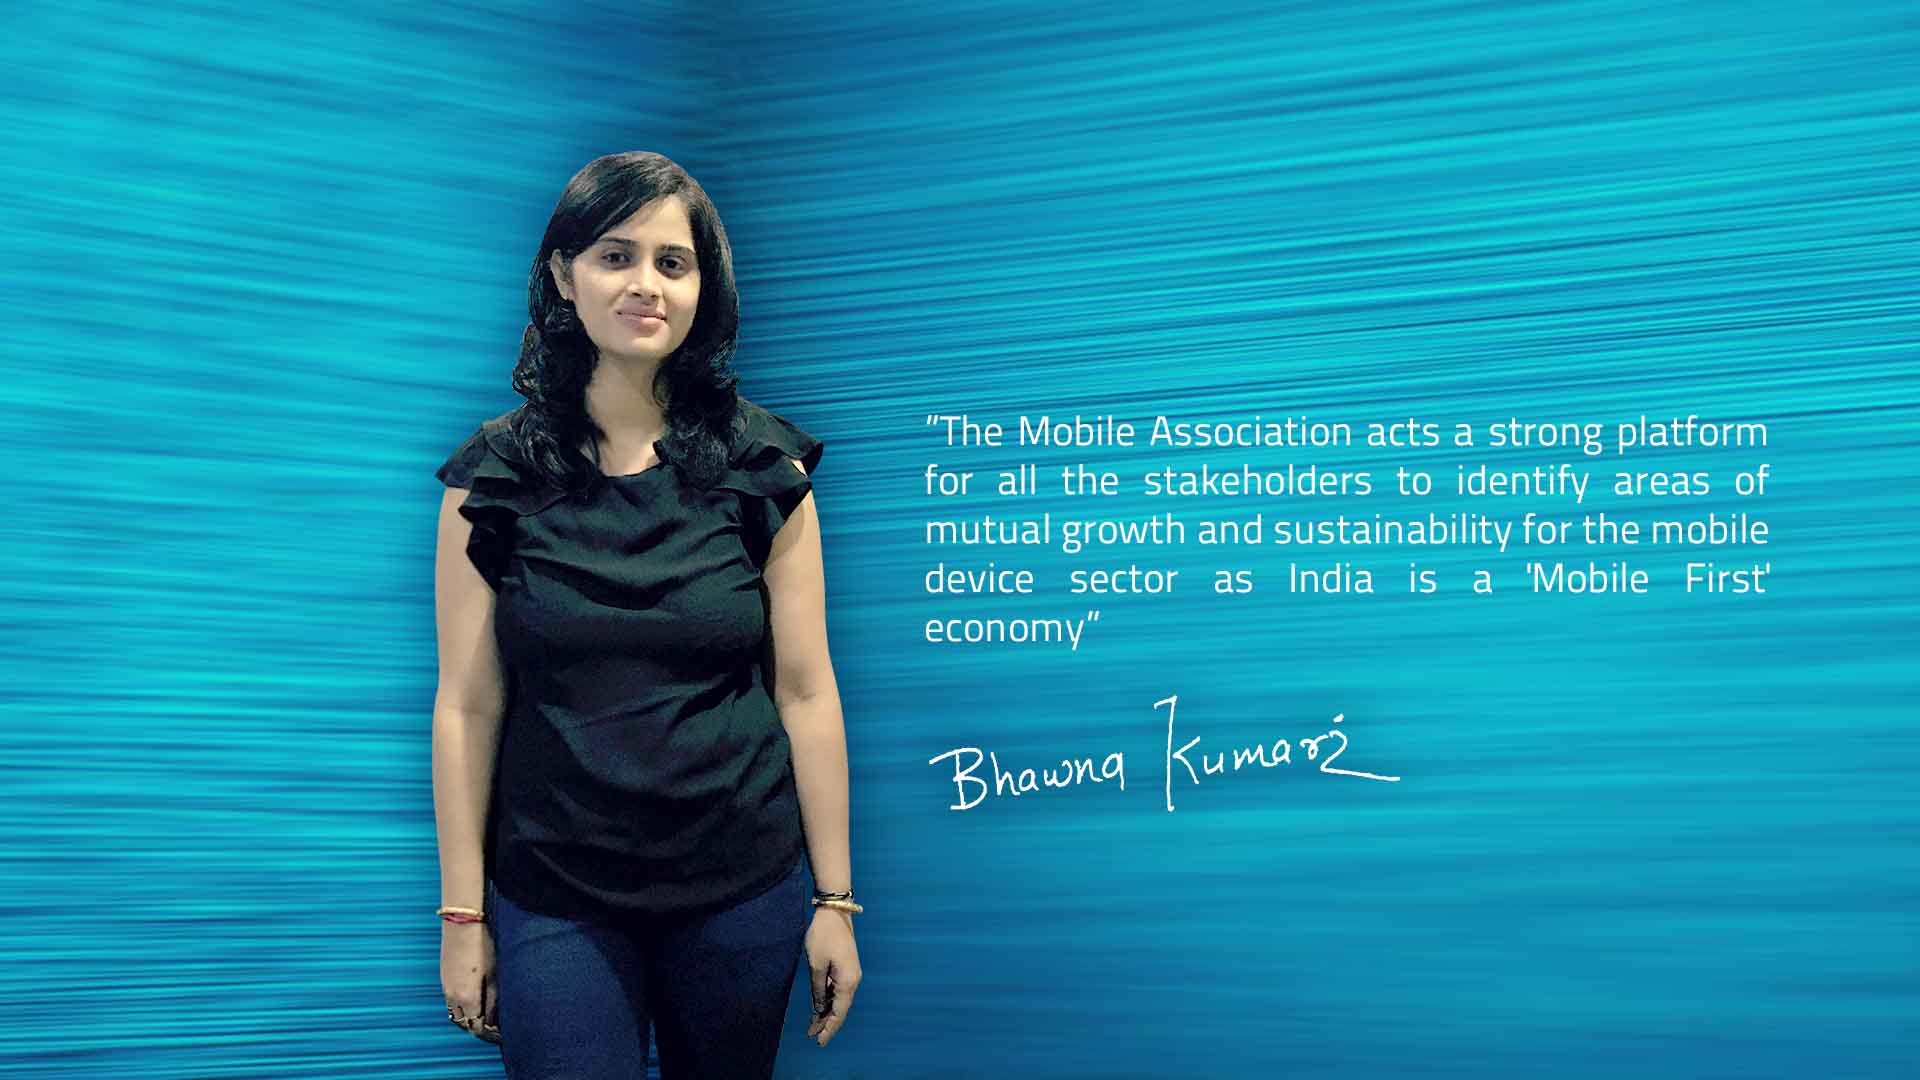 Bhawna Kumari President of The Mobile Association